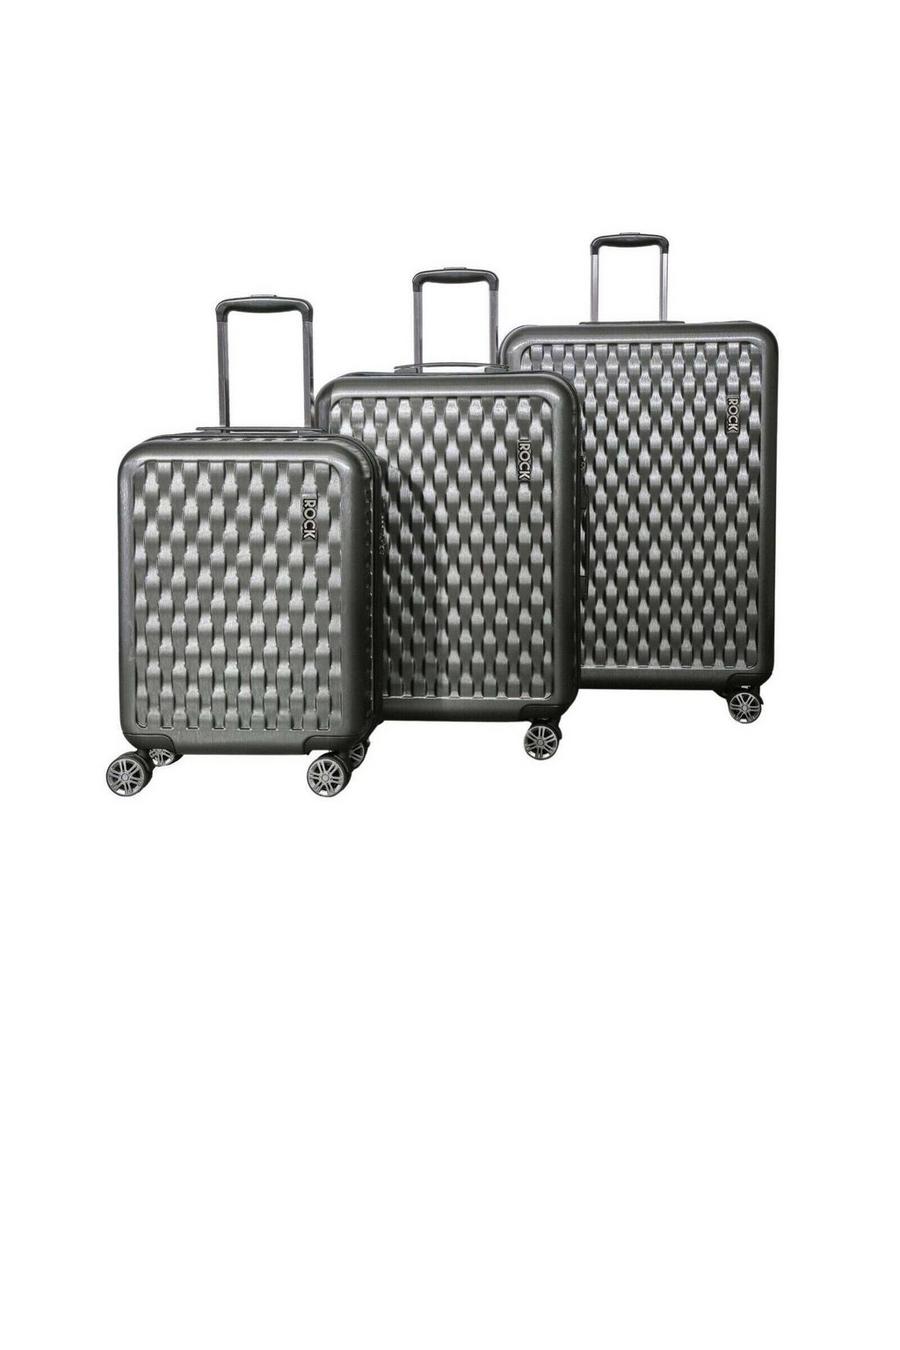 Charcoal Hard Shell Suitcase Luggage Bag